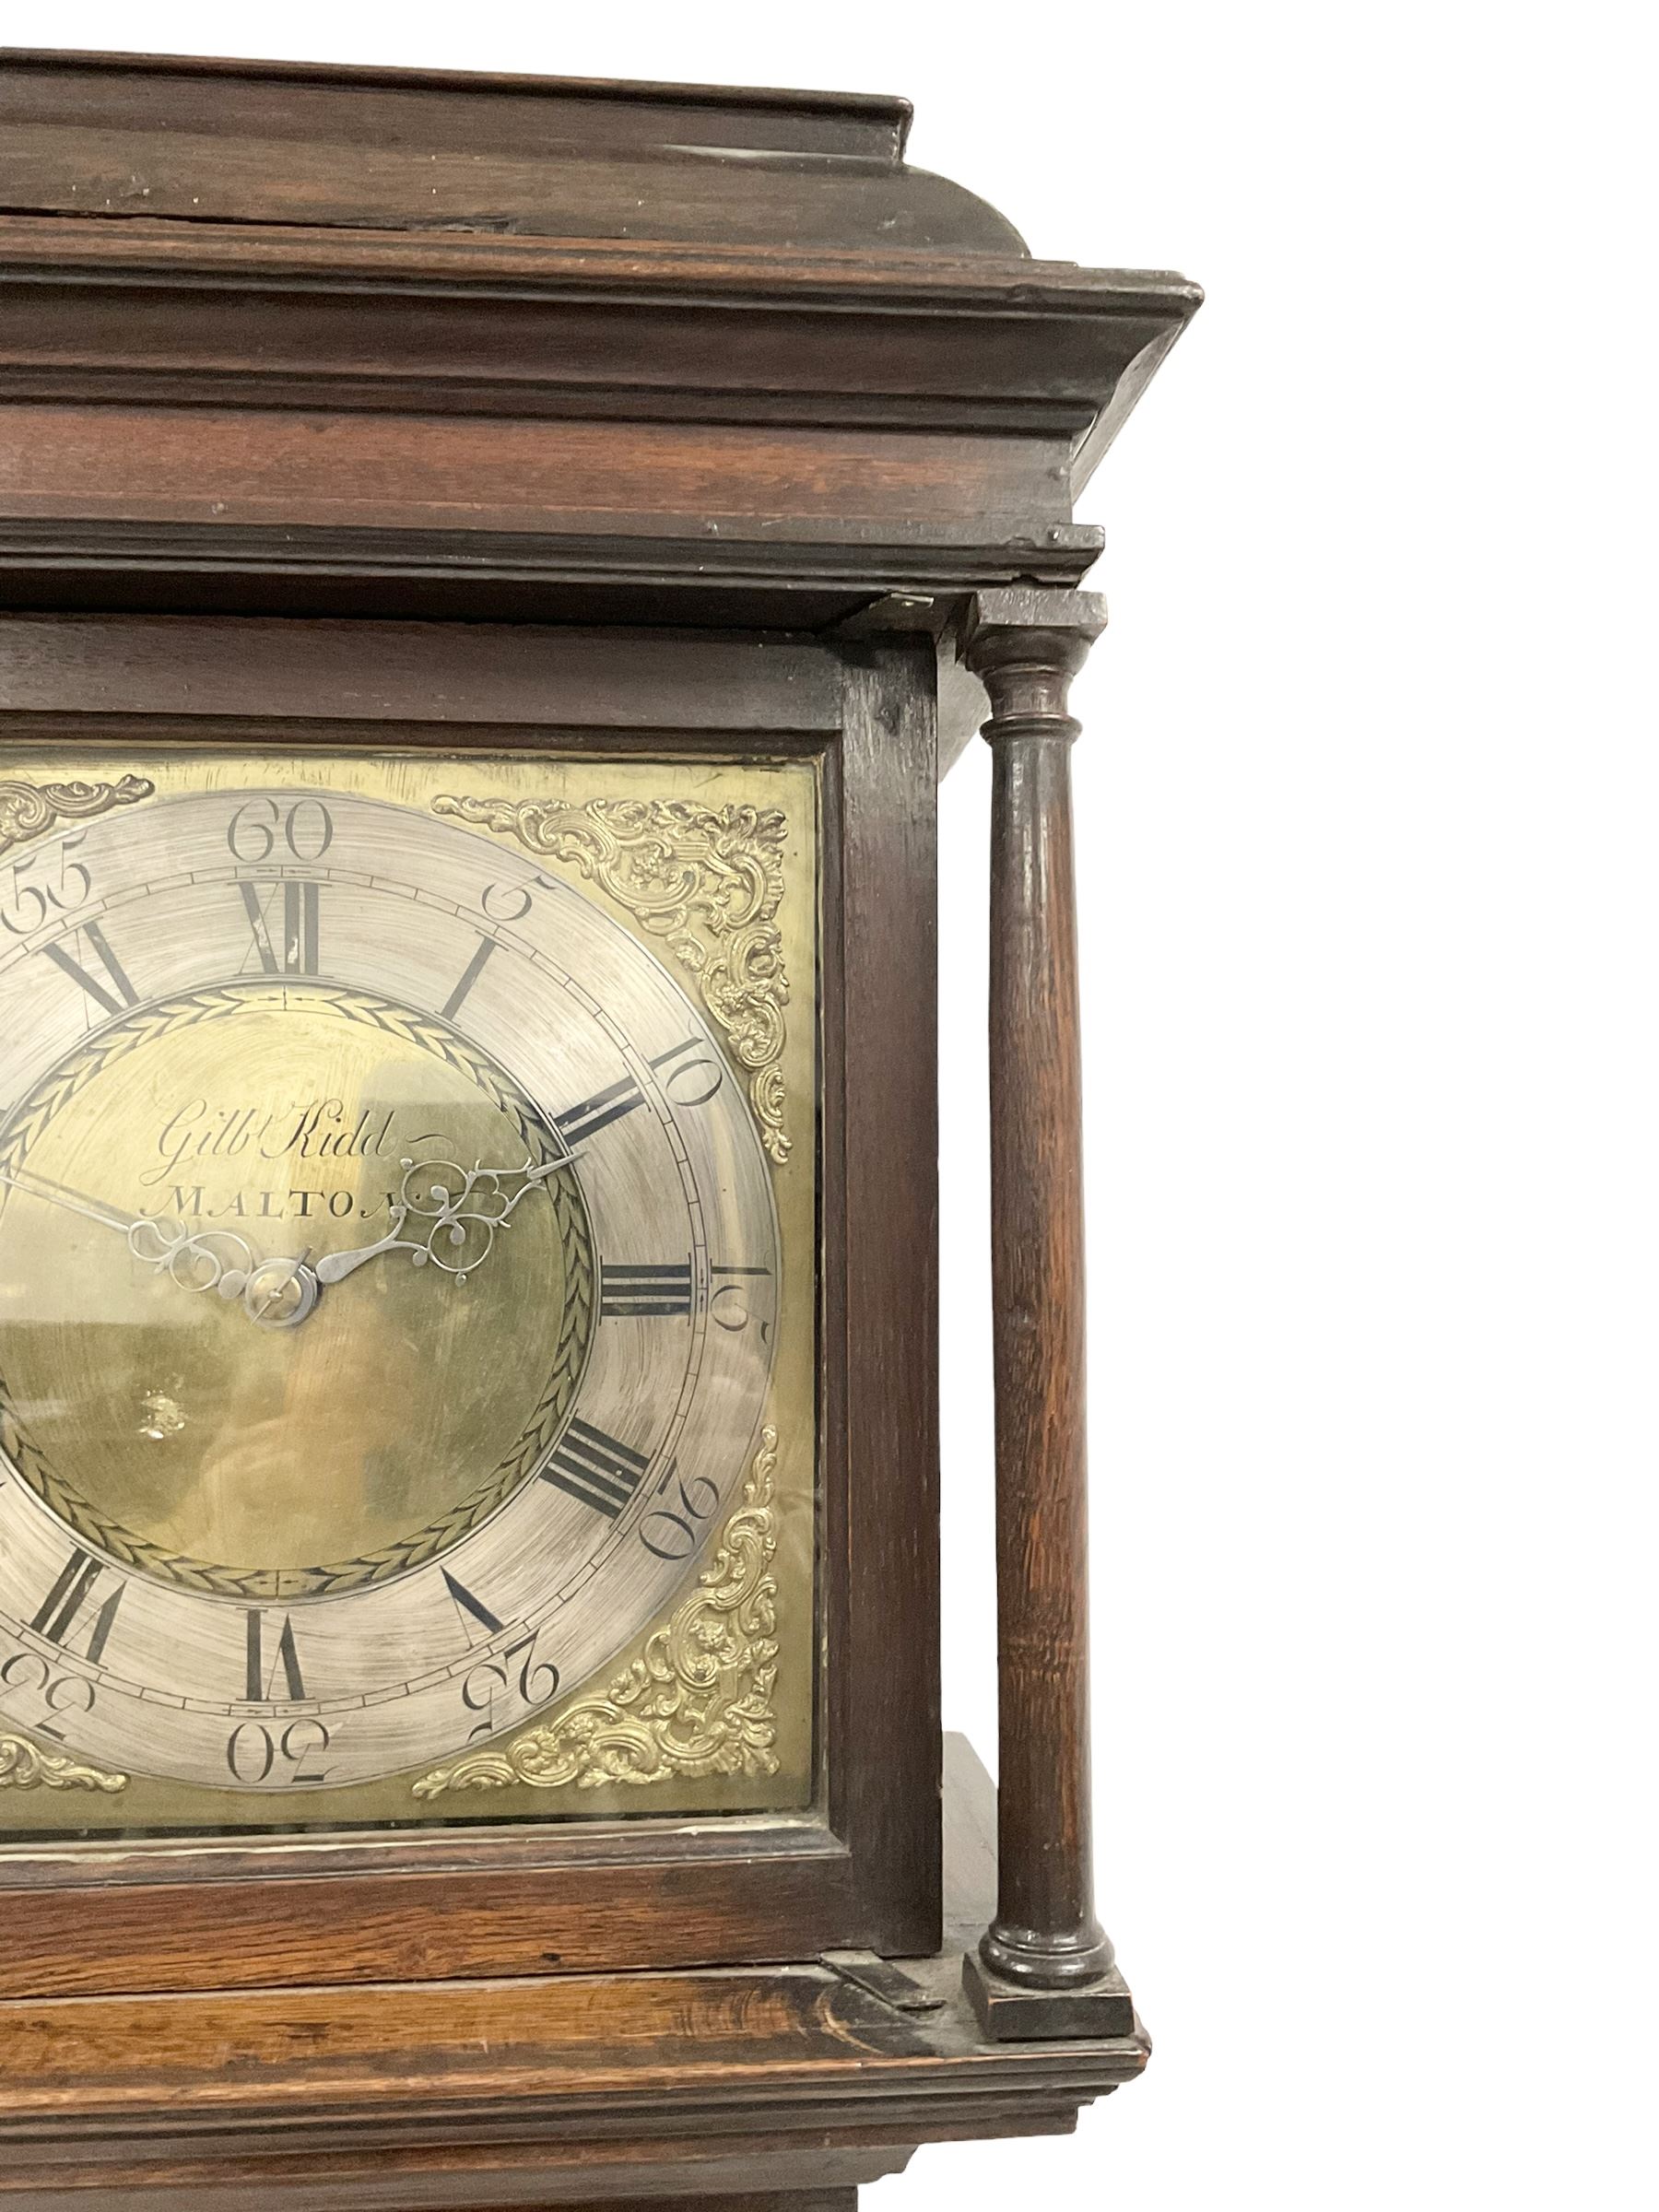 Gilbert Kidd of Malton - 30-hour 18th-century oak-cased longcase clock - Image 5 of 5